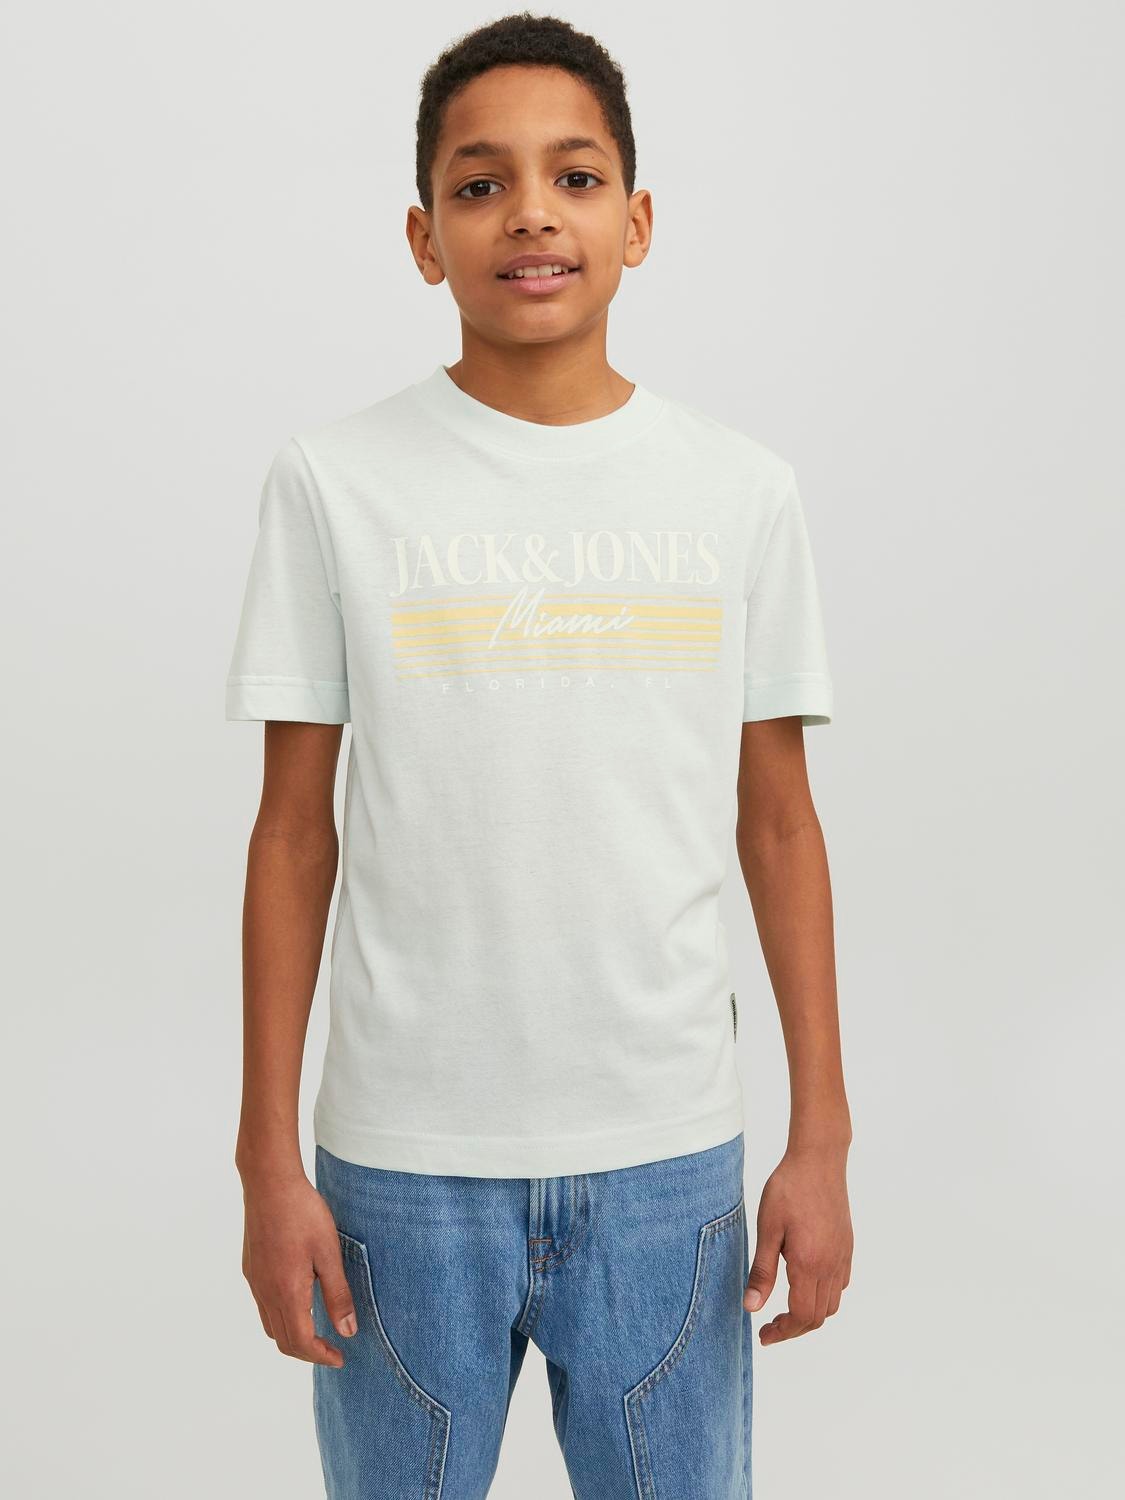 Jack & Jones Logo T-shirt Für jungs -Pale Blue - 12235498